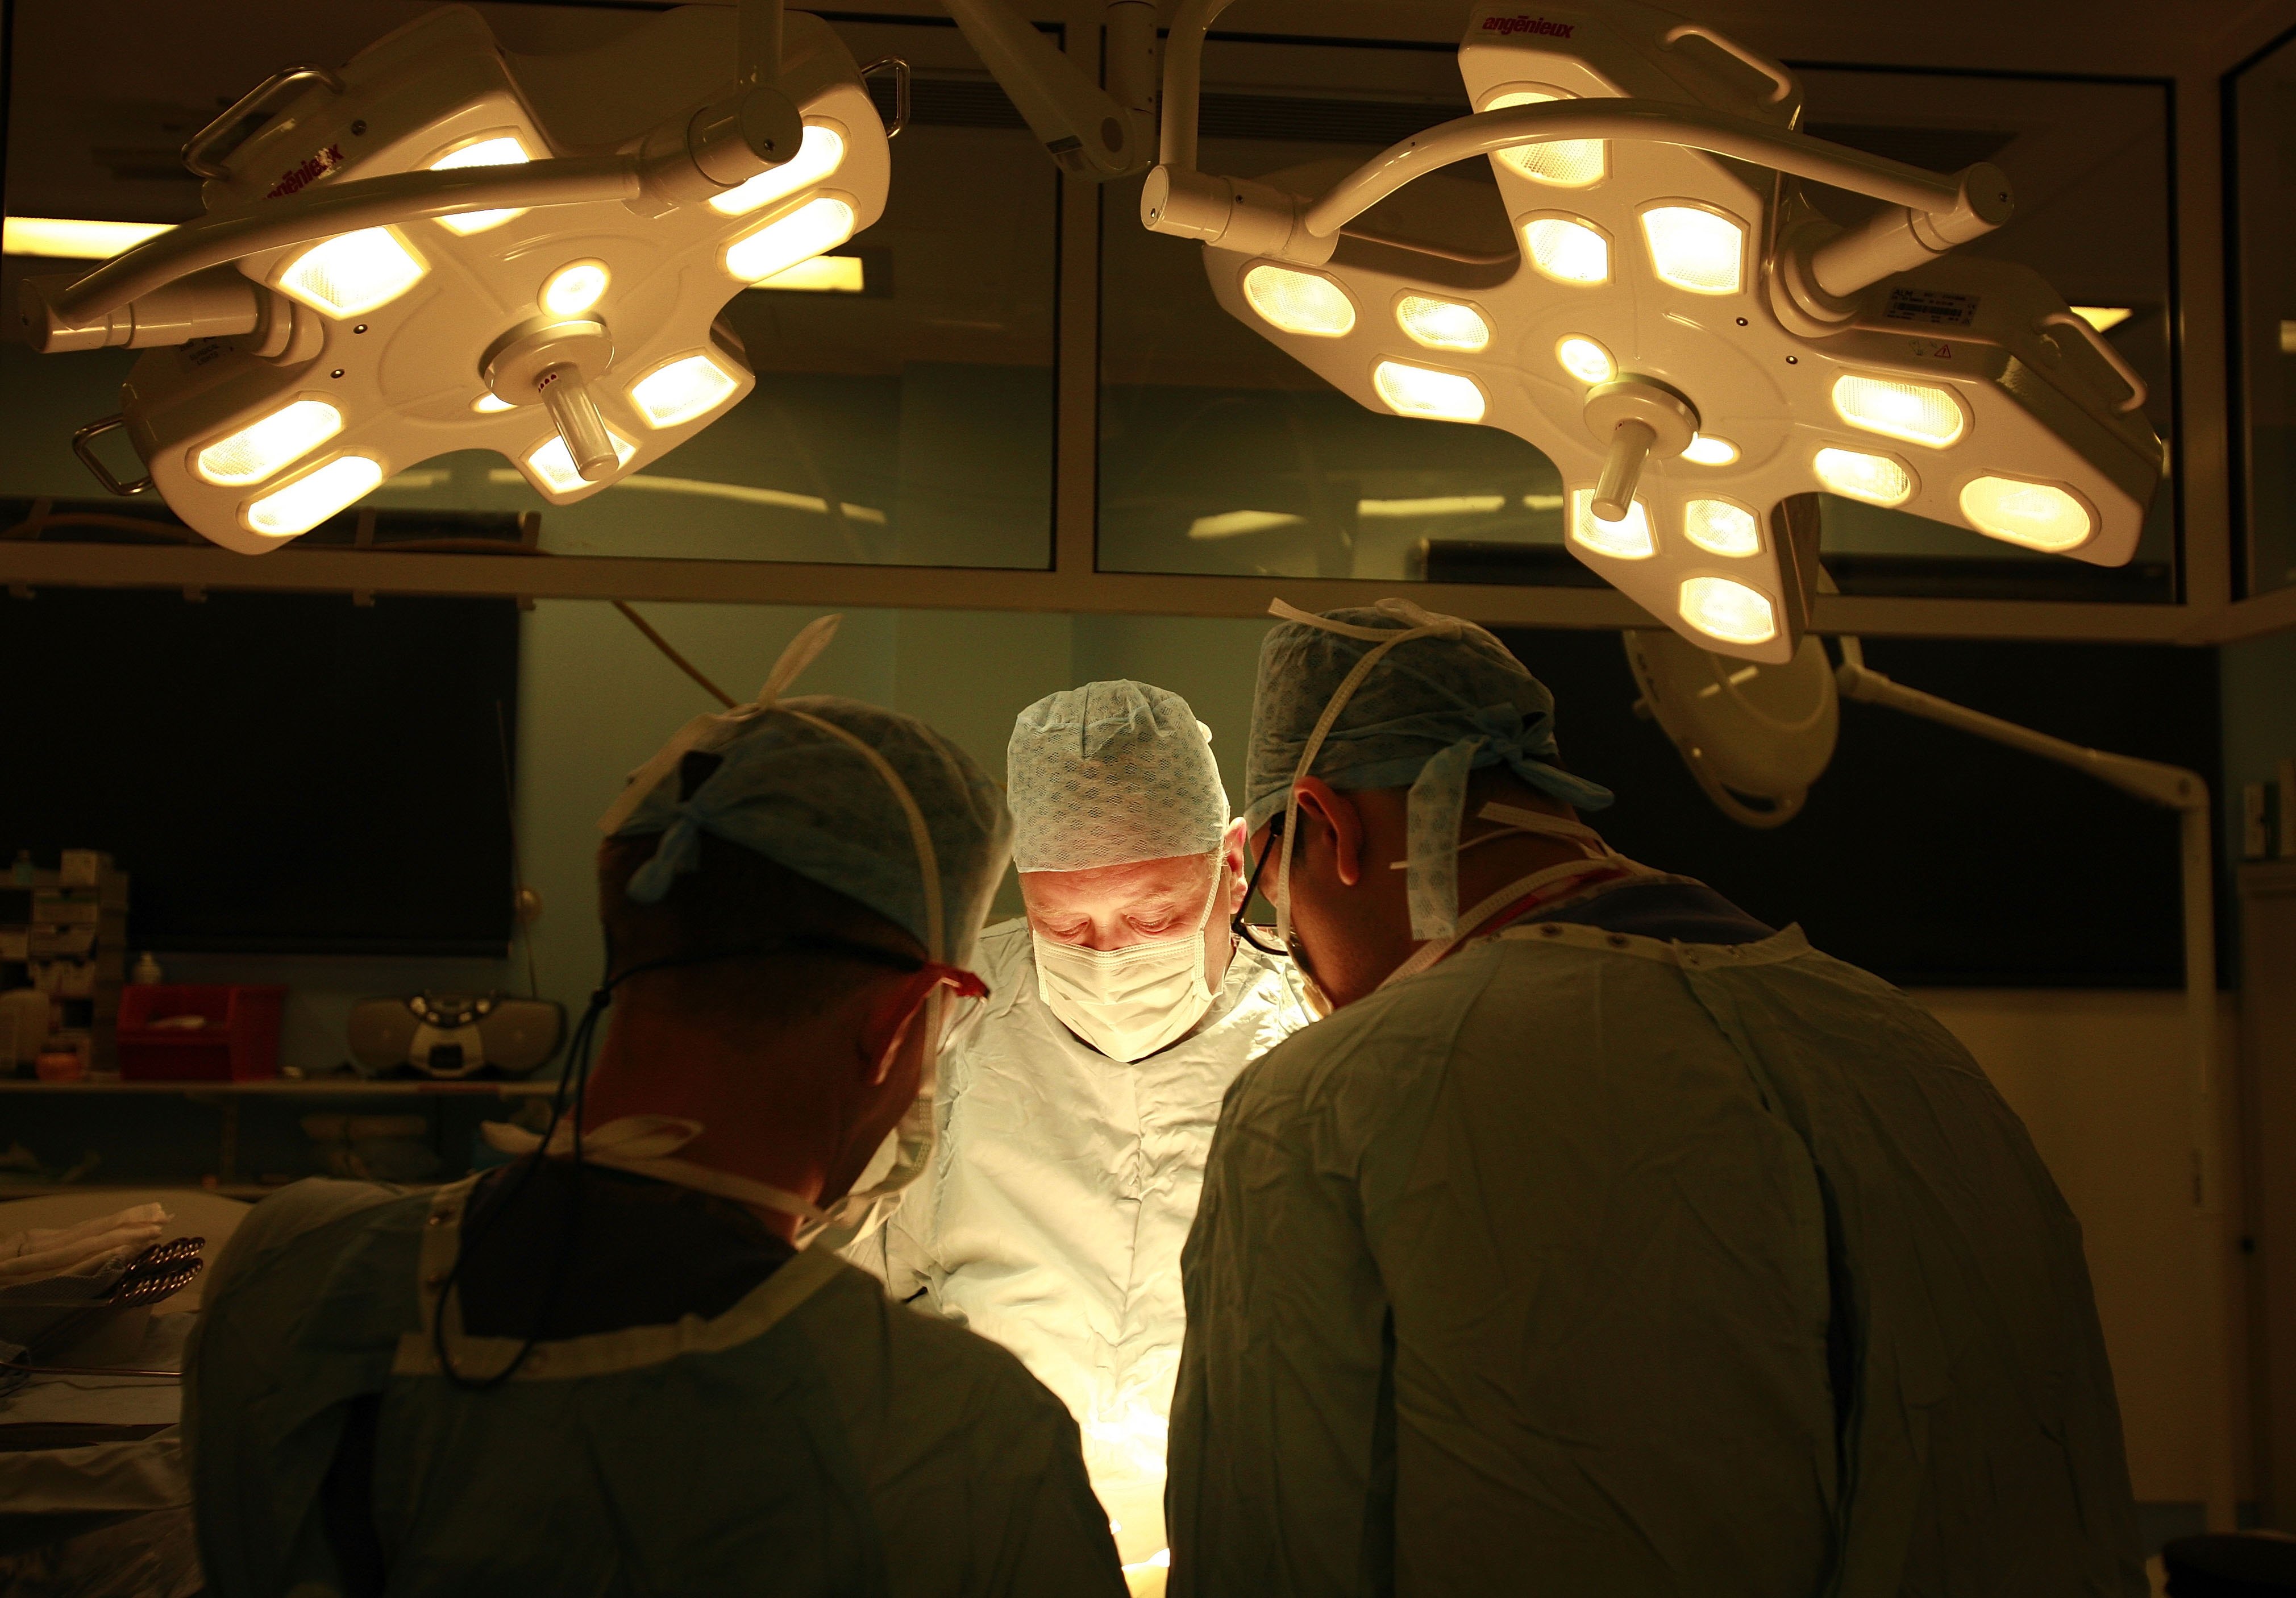 Doctors perform a kidney transplant.